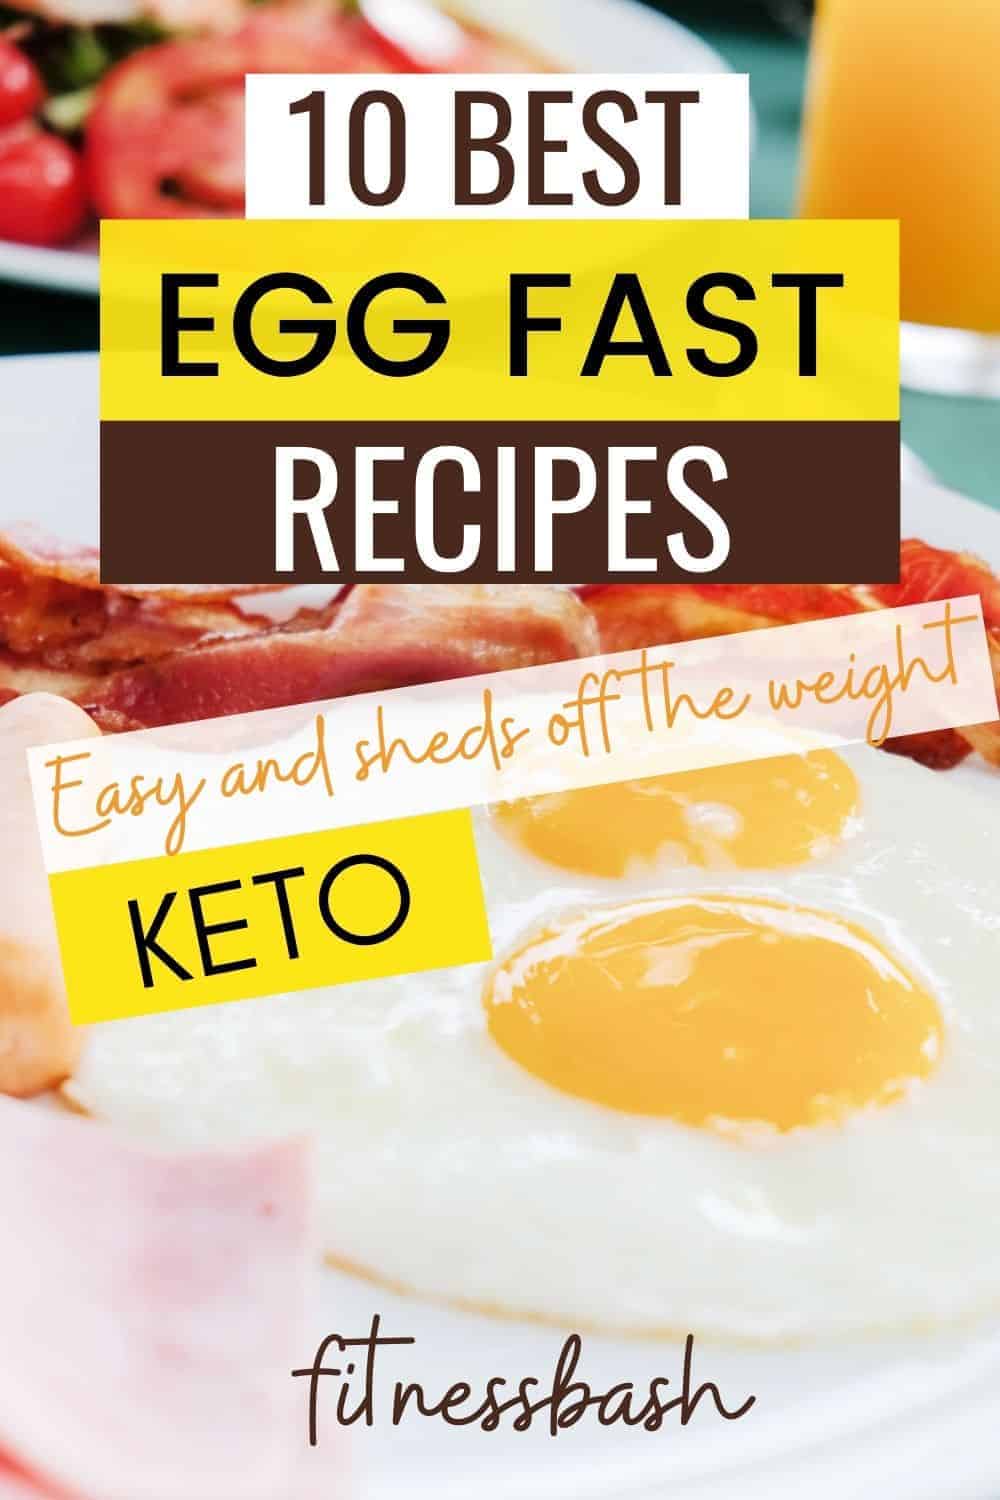 keto egg fast recipe